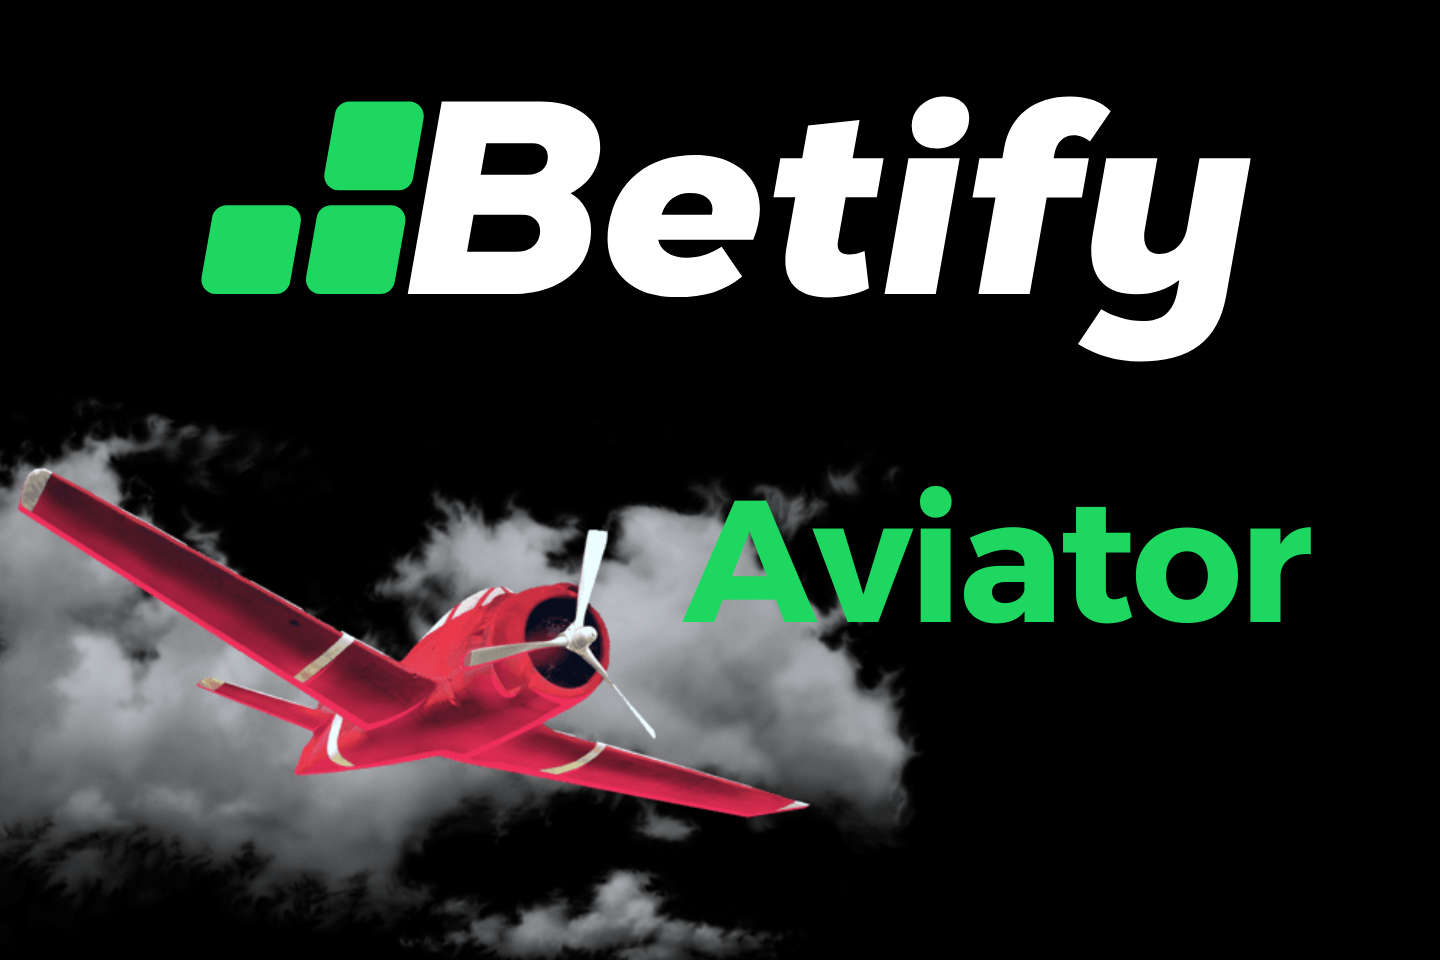 Aviator Betify